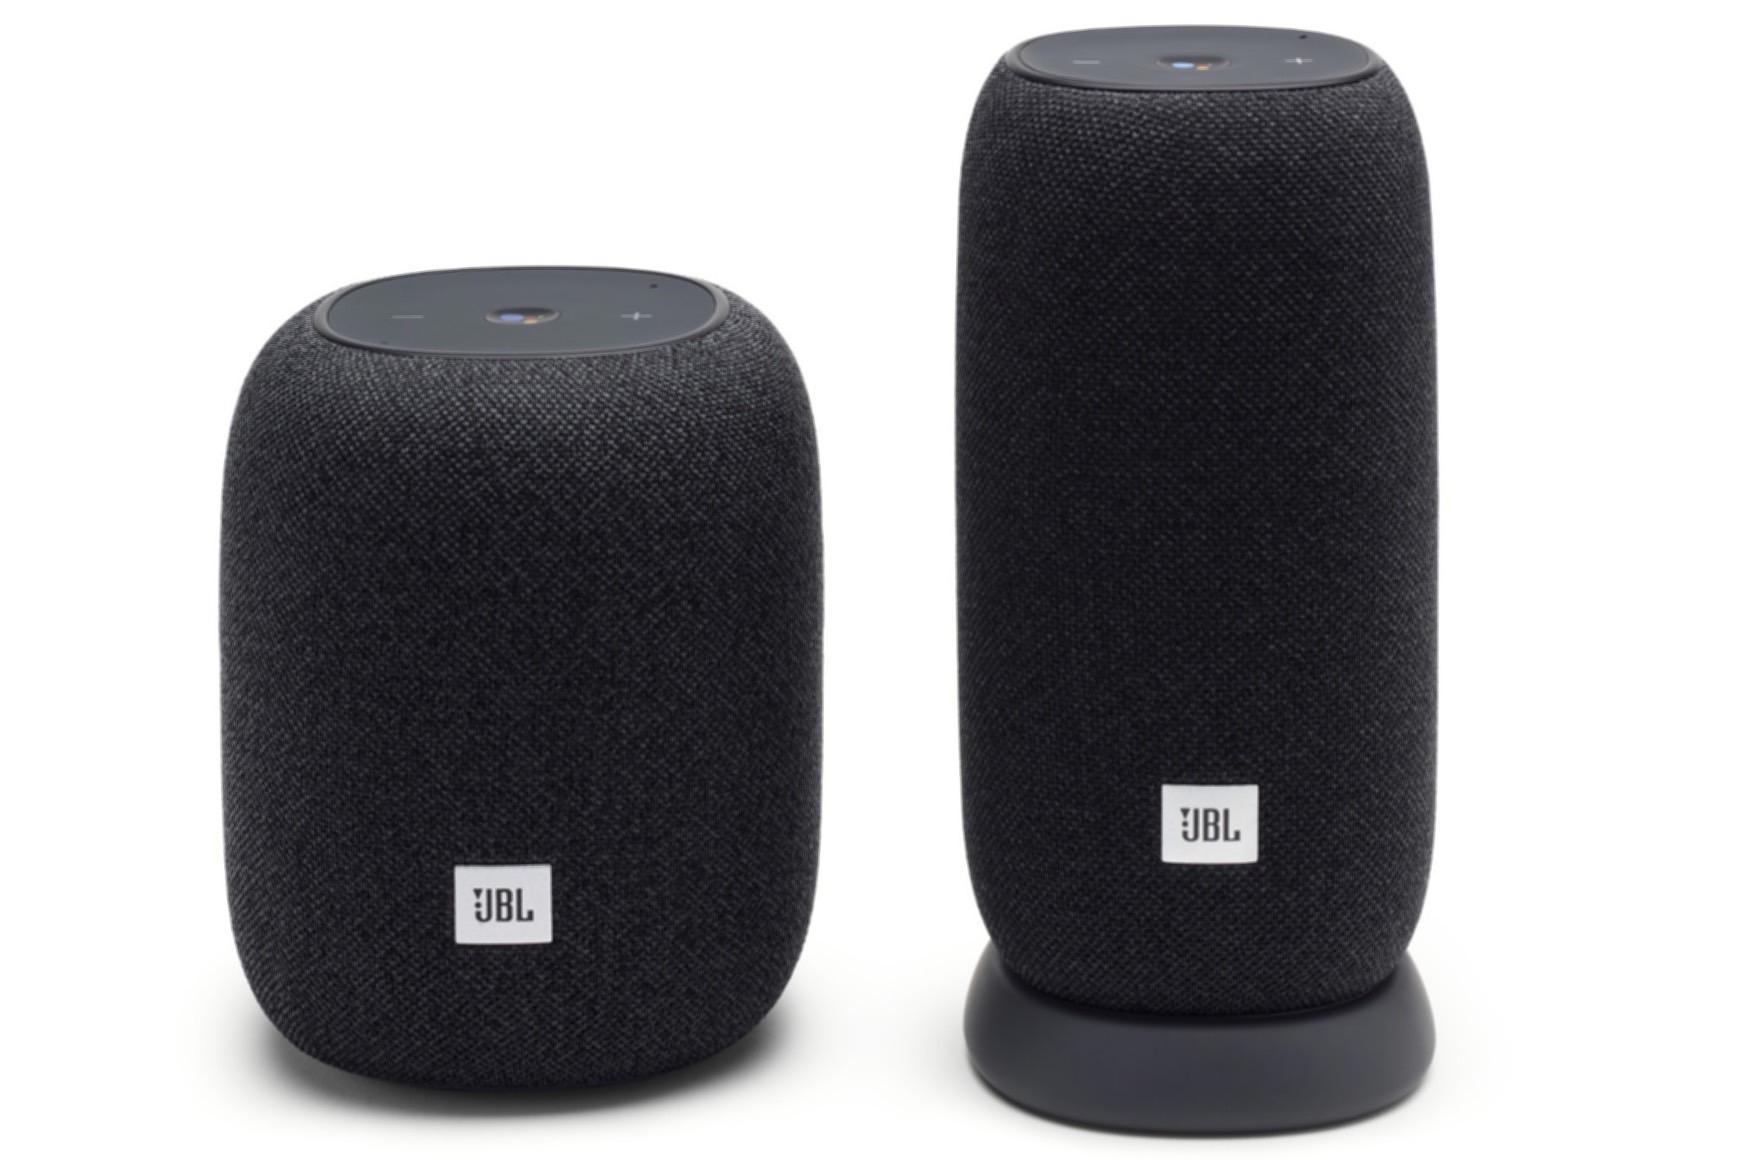 jbl new wireless speakers pulse 4 link music portable soundbars and black